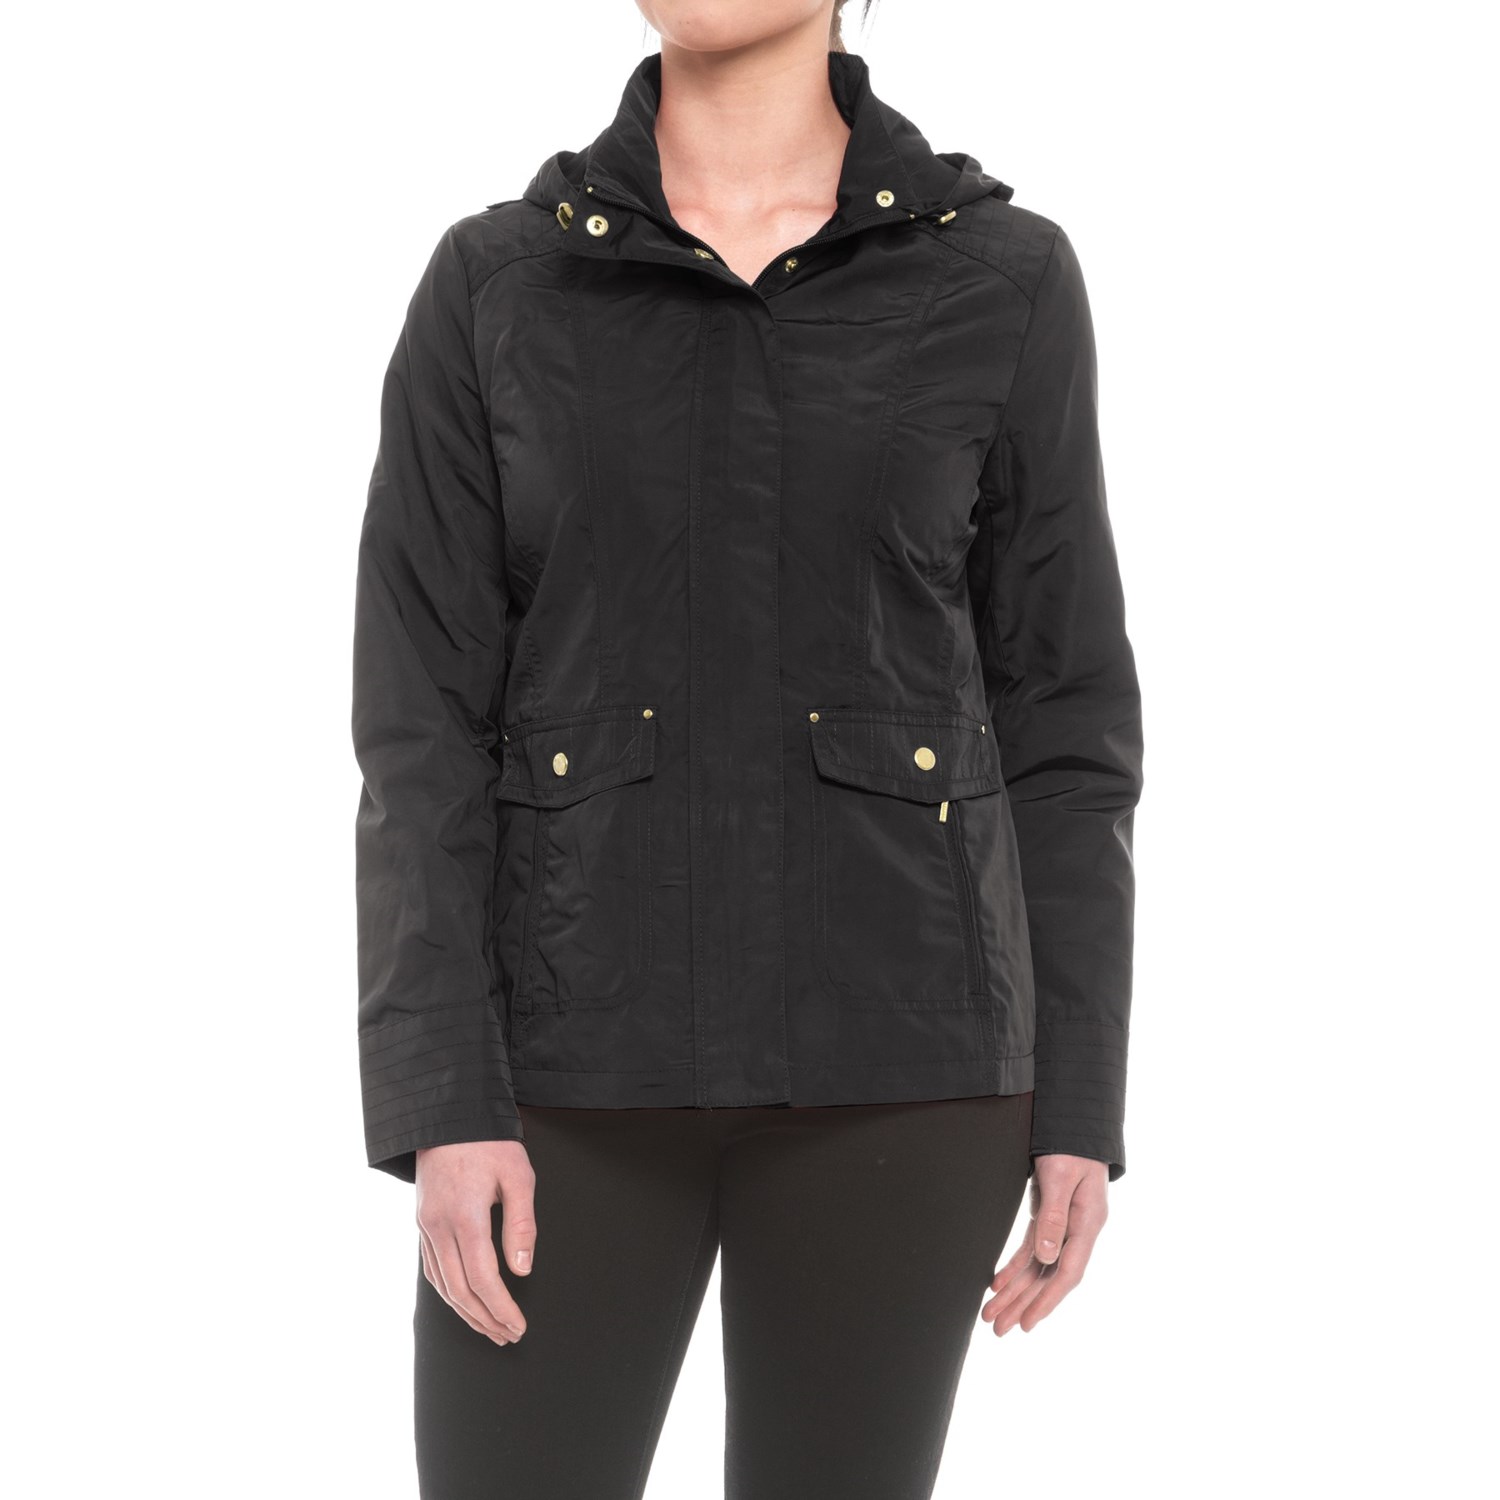 Weatherproof Hooded Anorak Jacket (For Women) - Save 51%